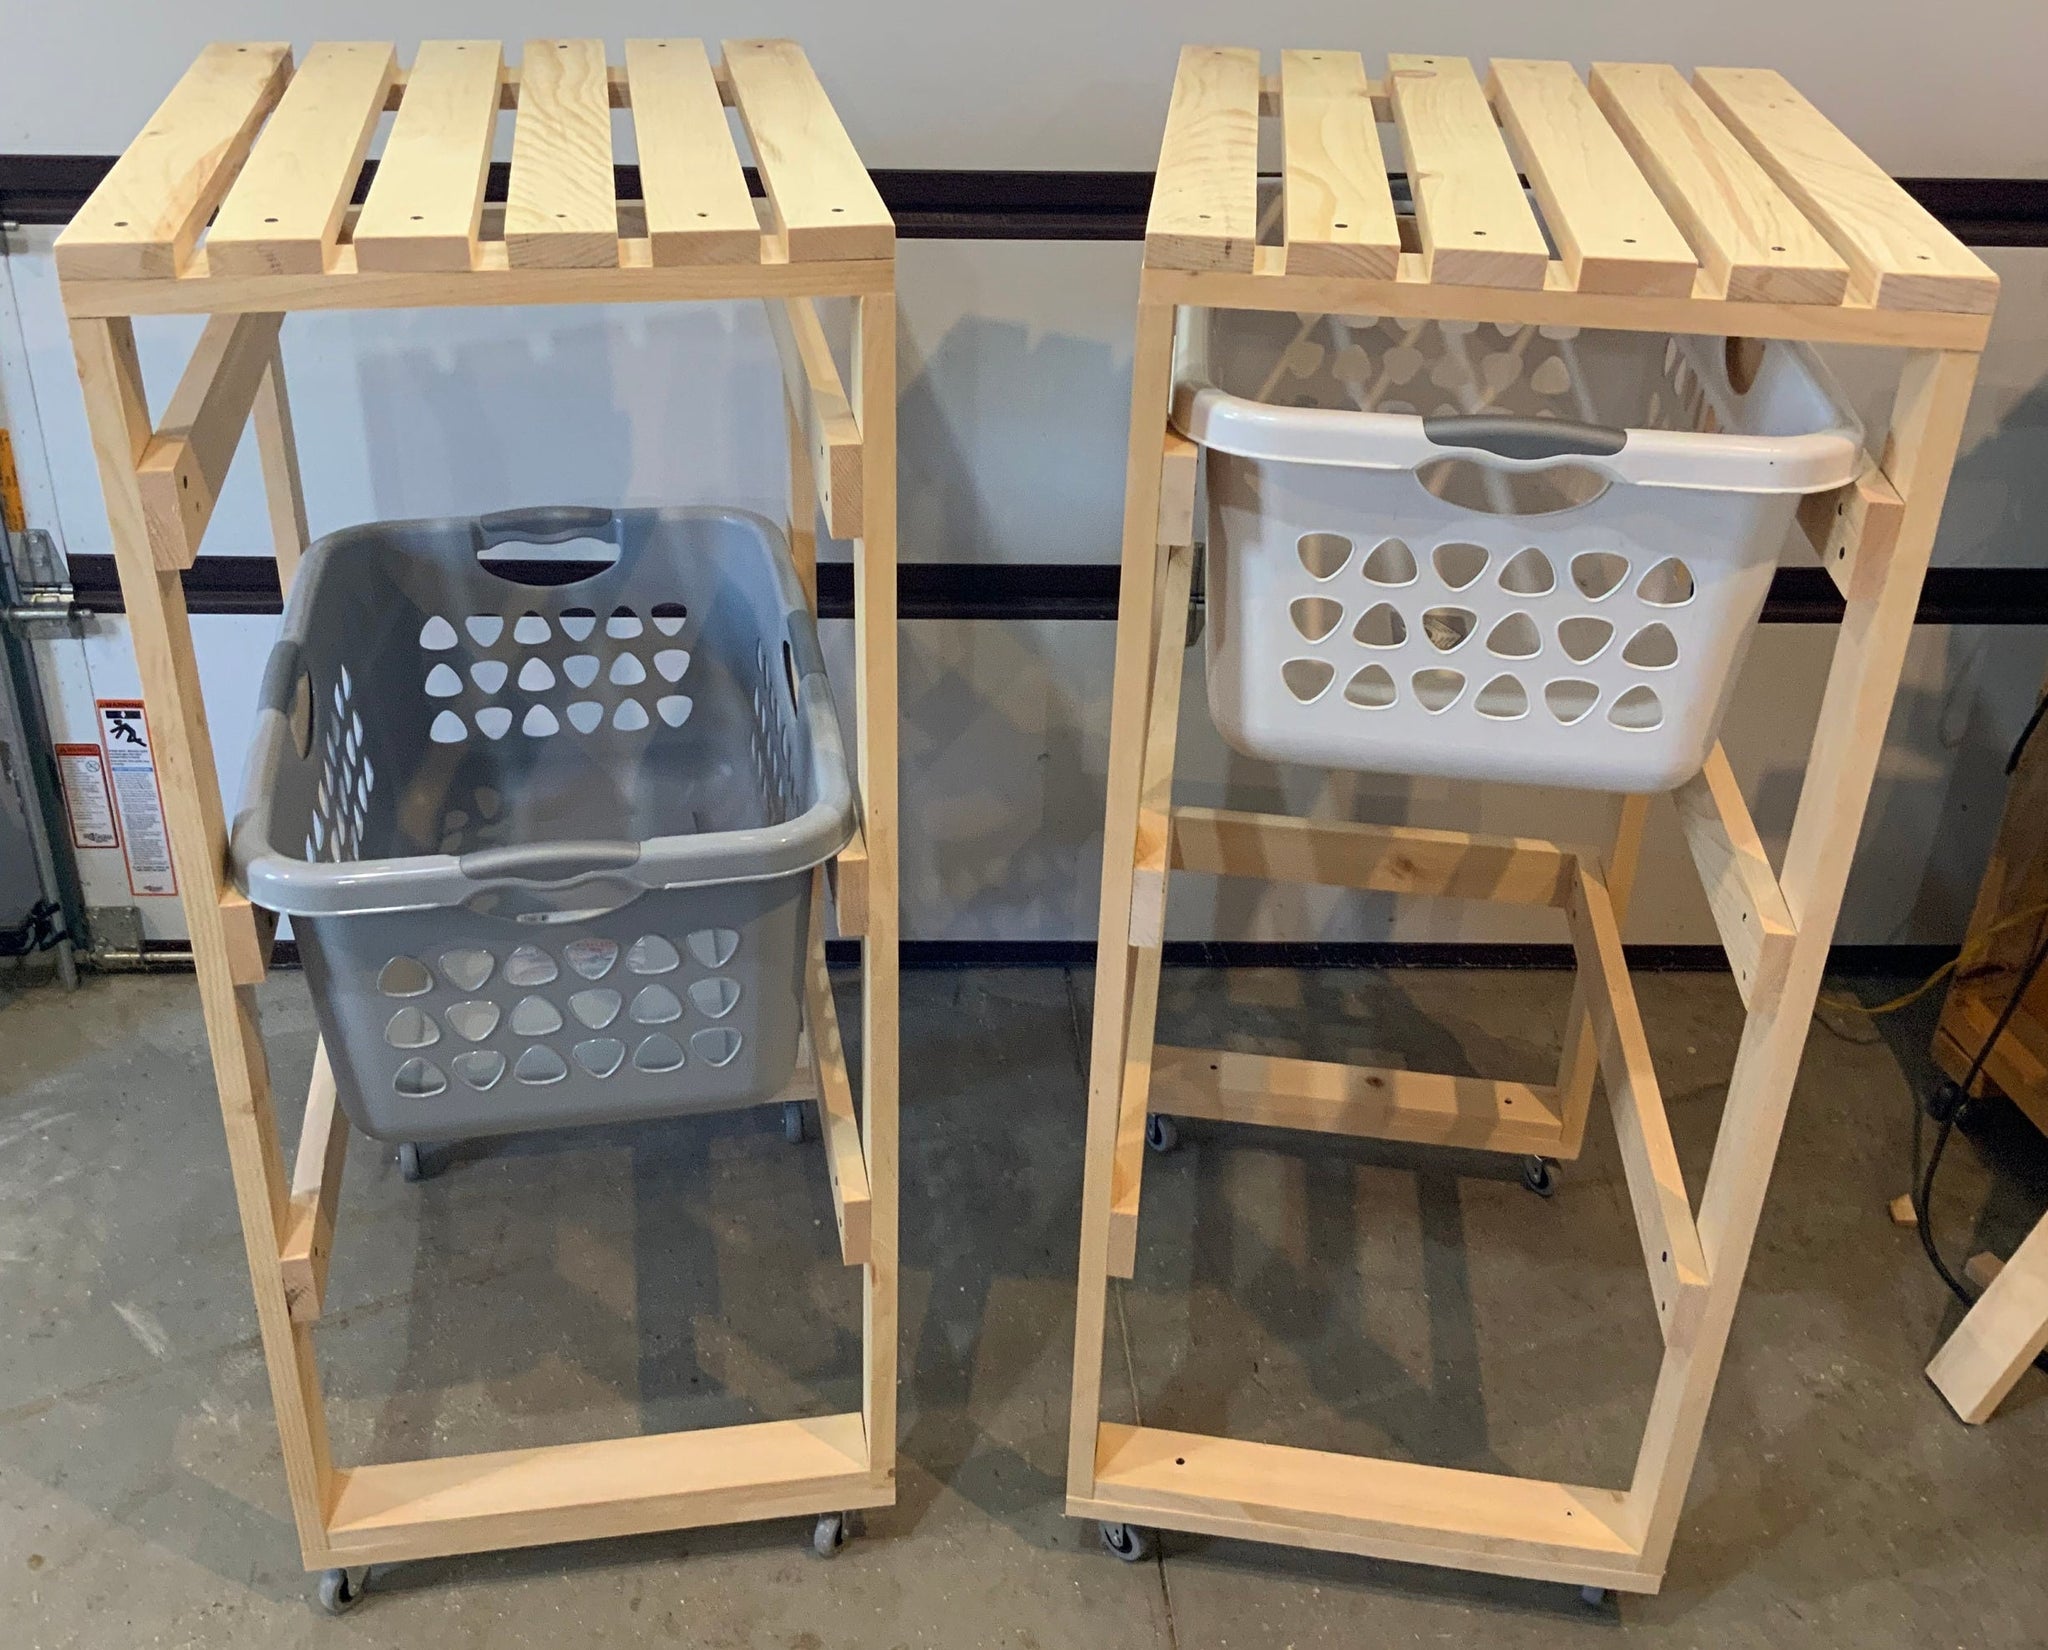 3 Tier Laundry Basket Holder (2 Bushel)